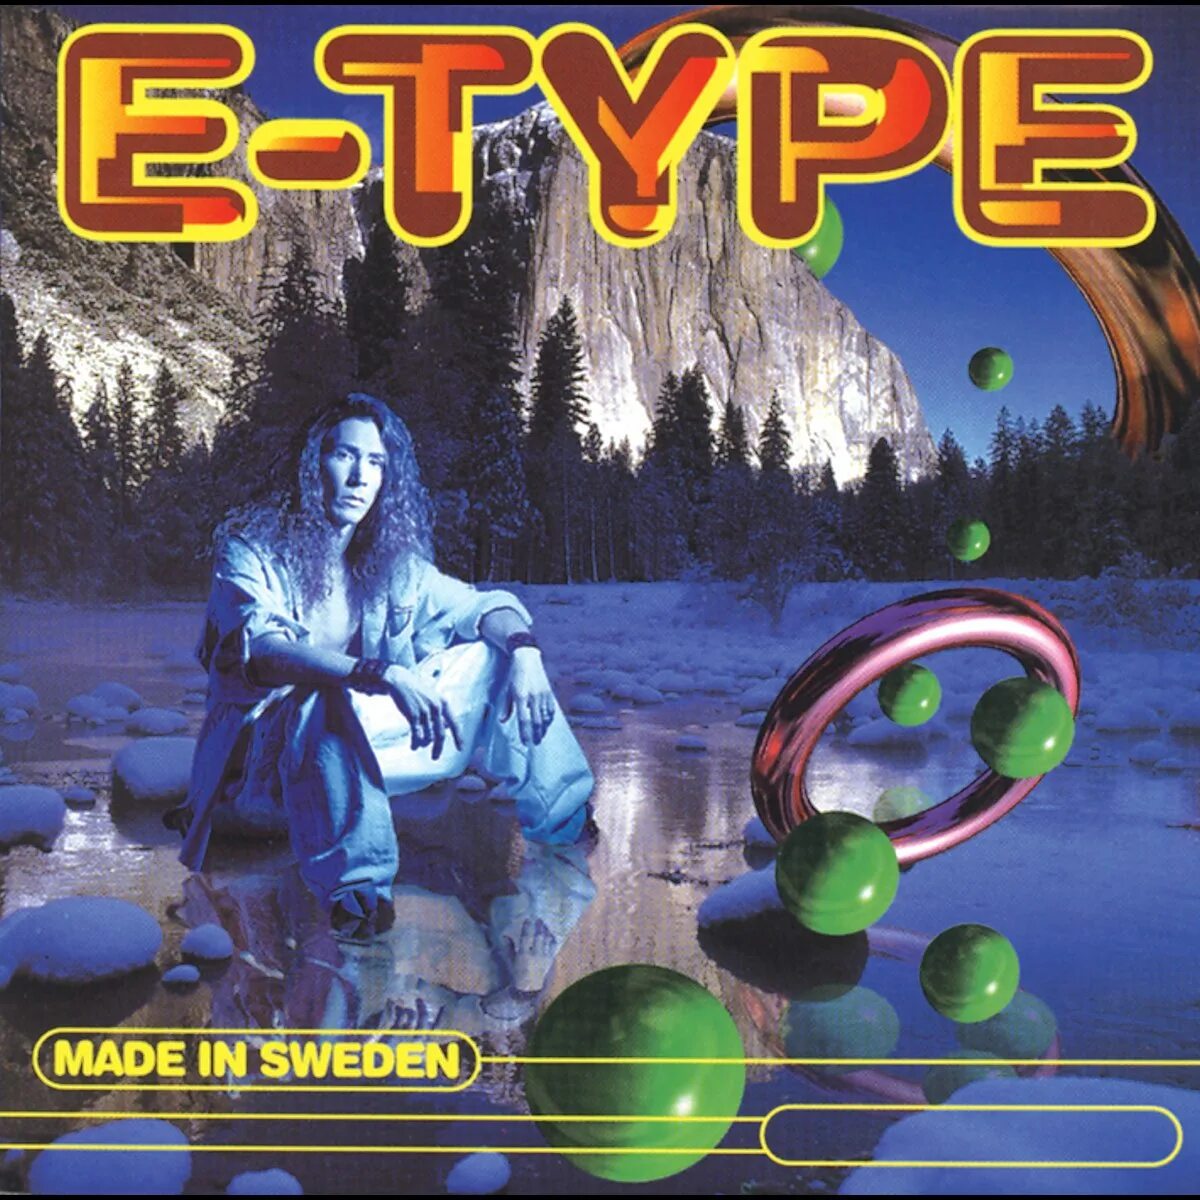 E type альбомы. E-Type made in Sweden 1994. E Type made in Sweden альбом. E-Type 1994. E-Type made in Sweden 1994 Japan.